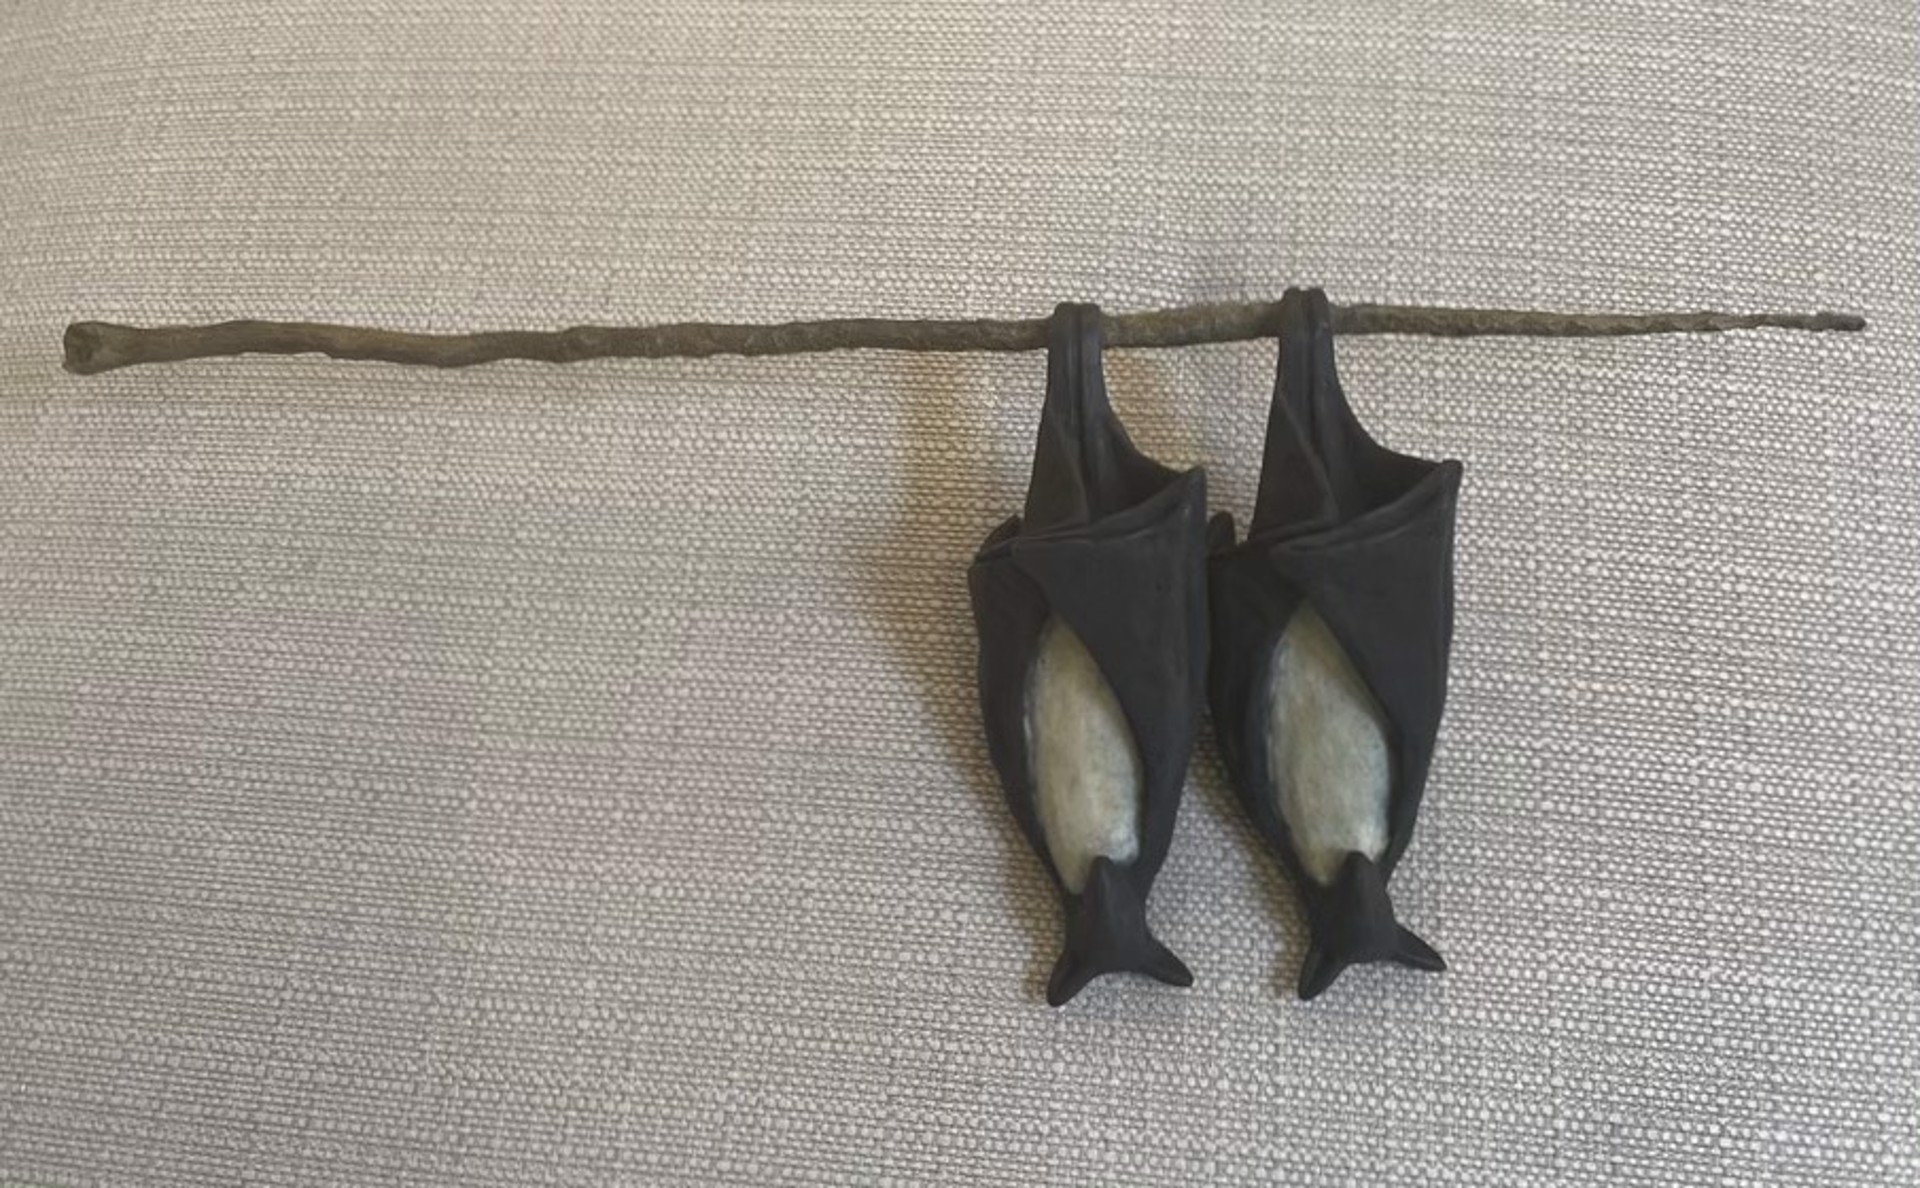 2 Temple Bats on a Branch by Copper Tritscheller